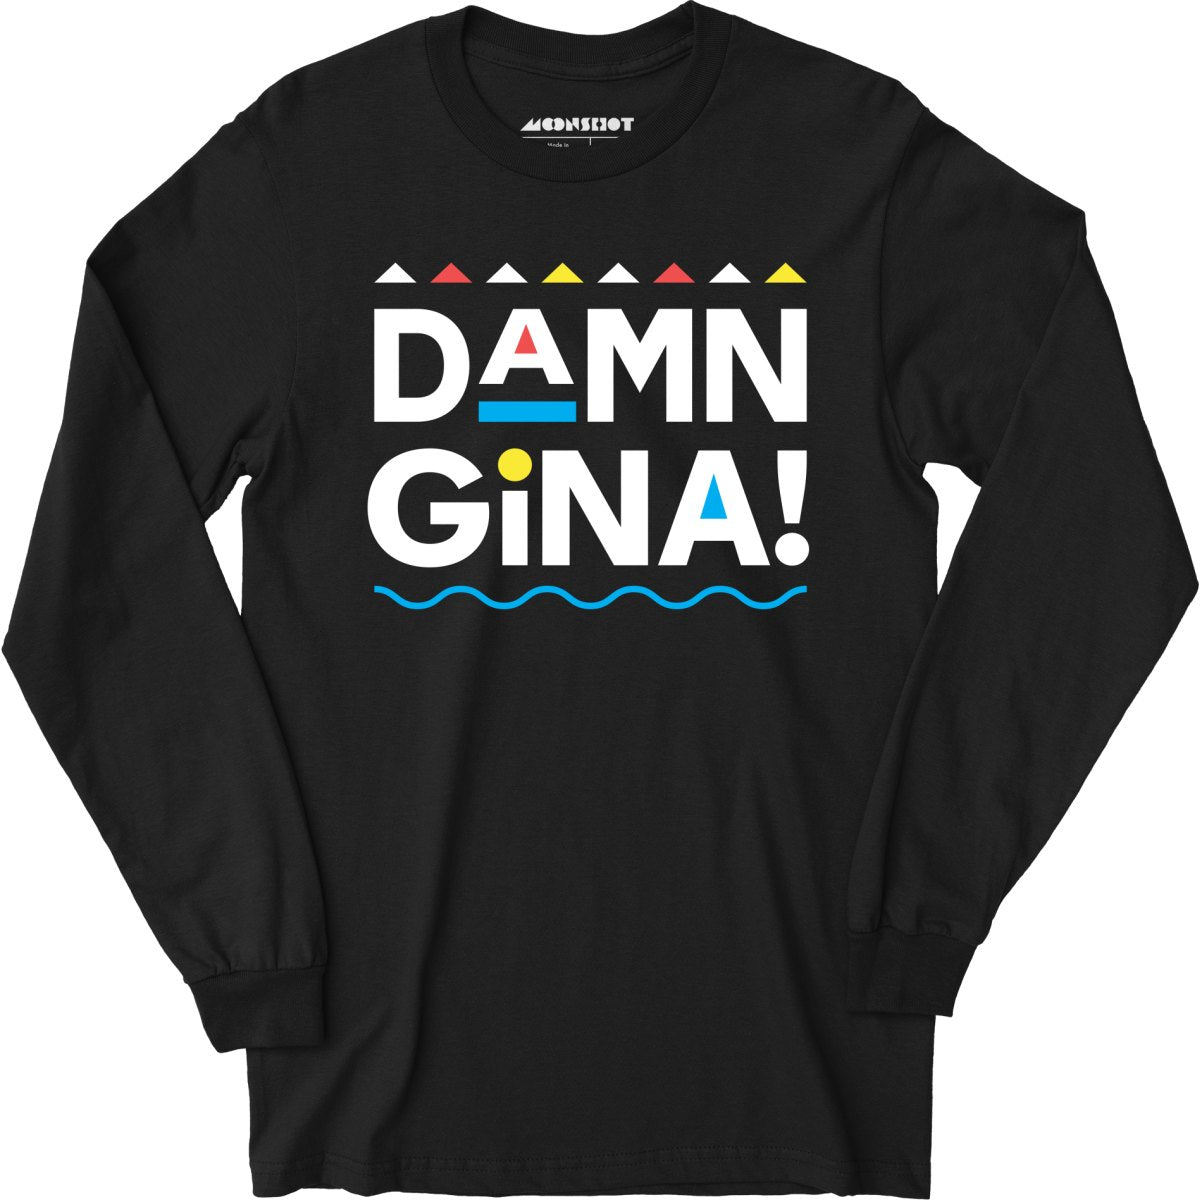 Damn Gina! - Long Sleeve T-Shirt